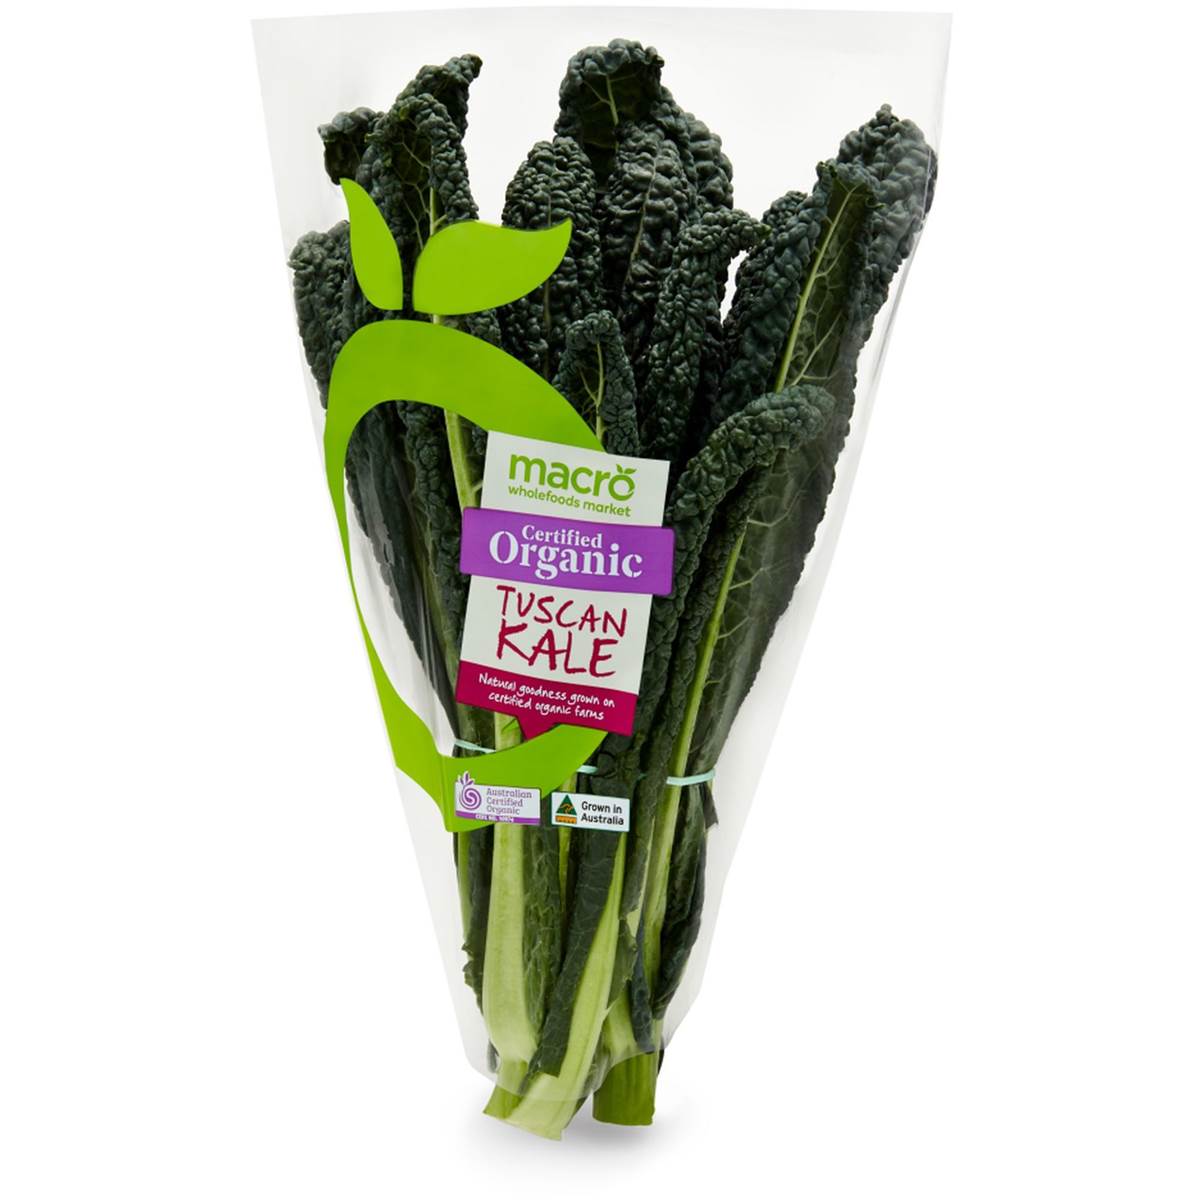 Calories in Macro Certified Organic Tuscan Kale